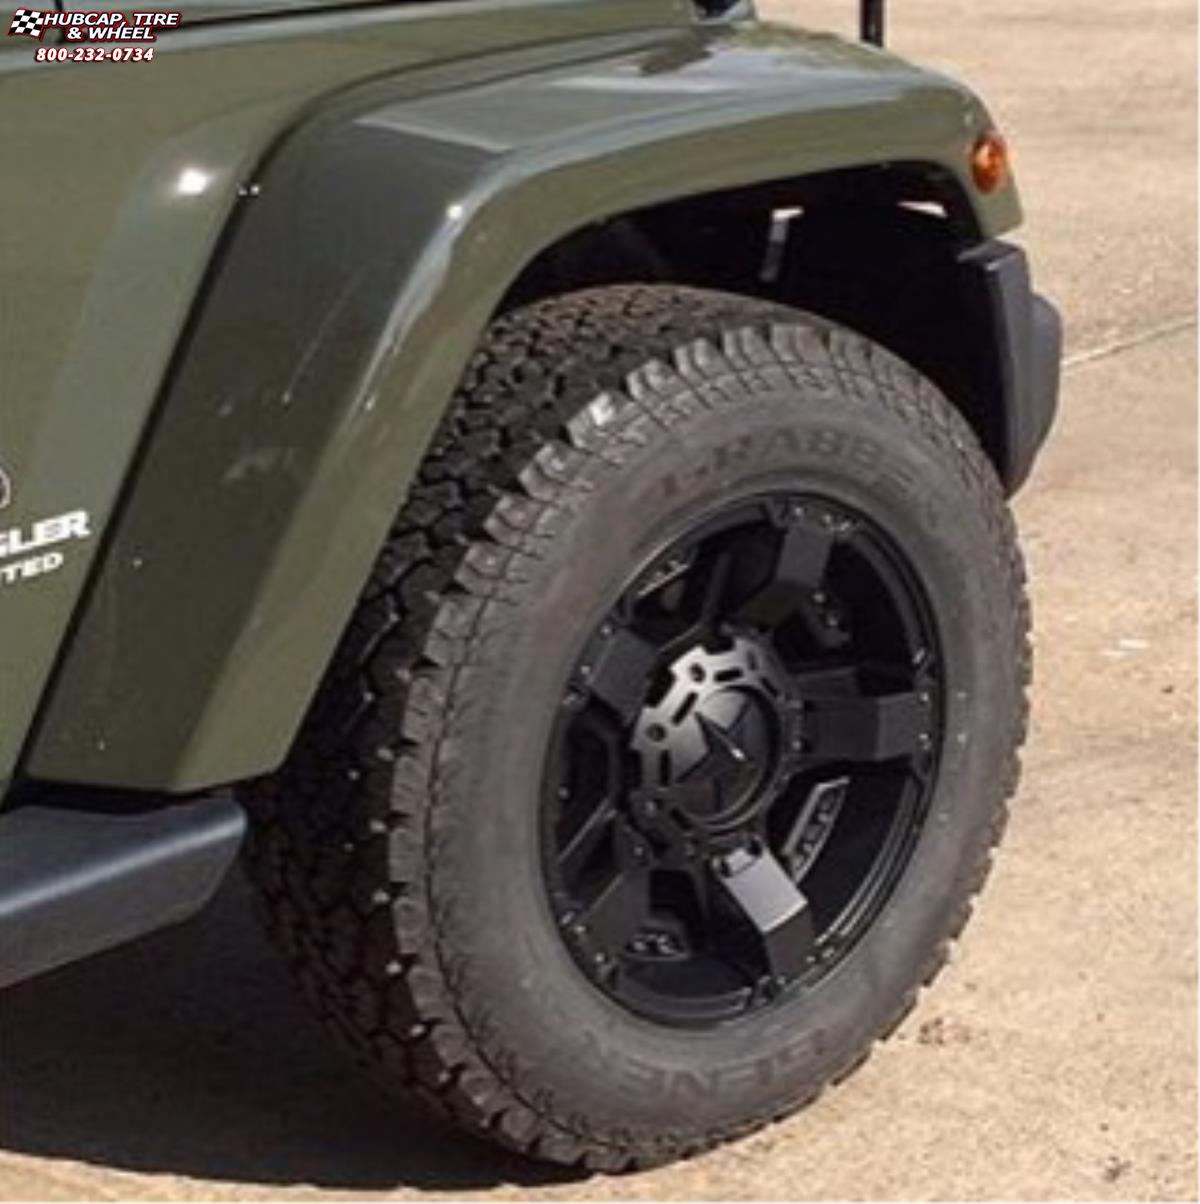 vehicle gallery/jeep wrangler xd series xd811 rockstar 2   wheels and rims